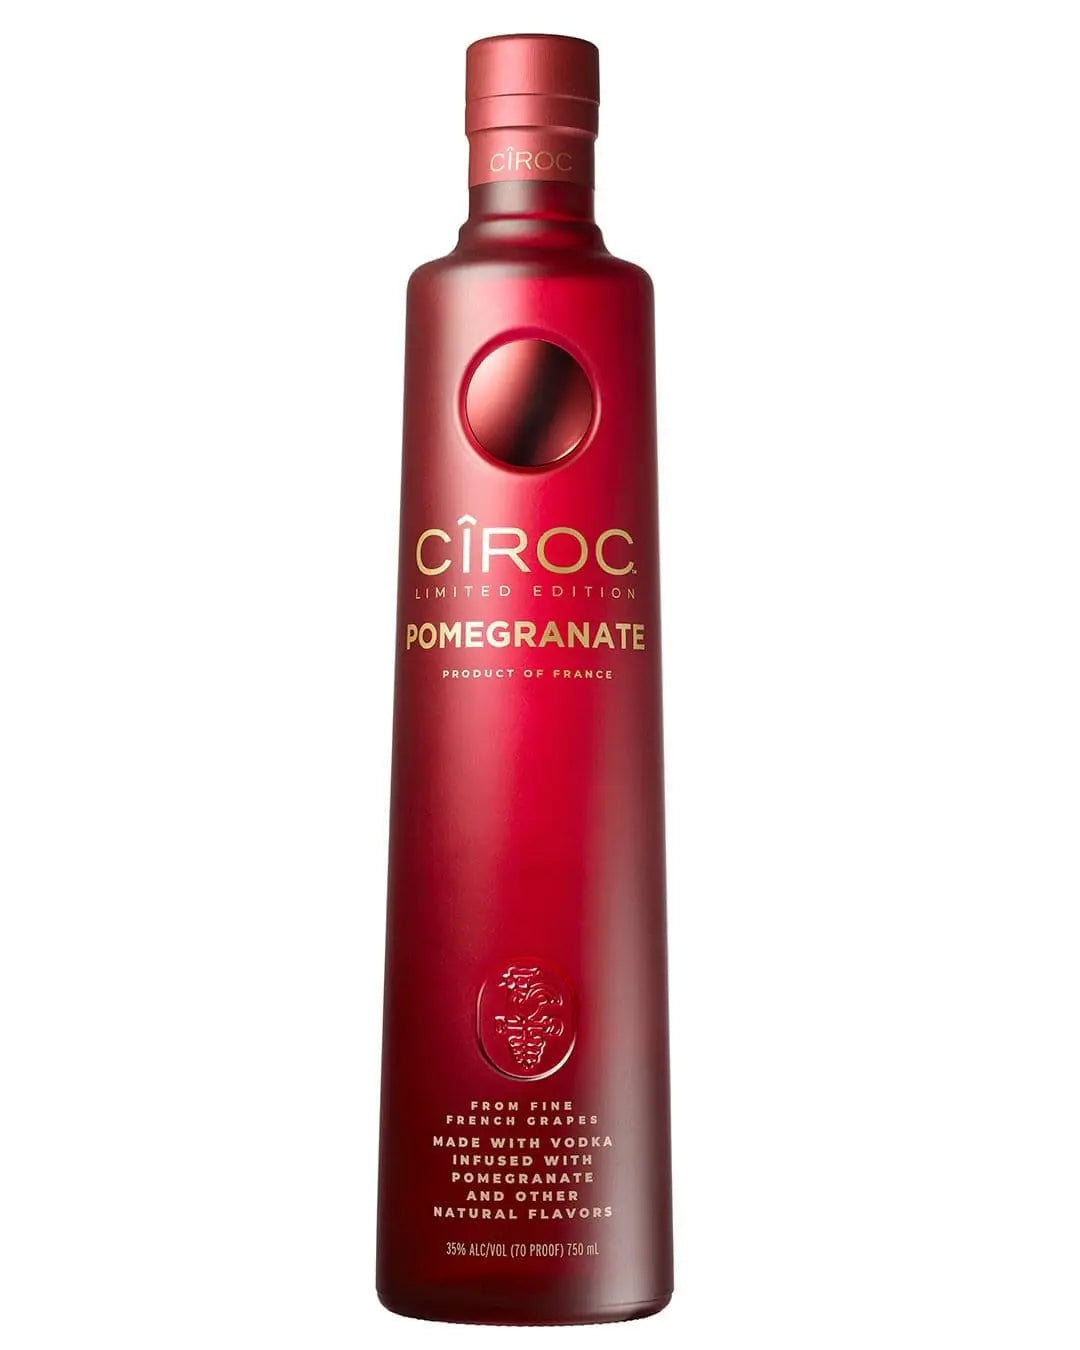 Ciroc Limited Edition Pomegranate Vodka, 70 cl Vodka